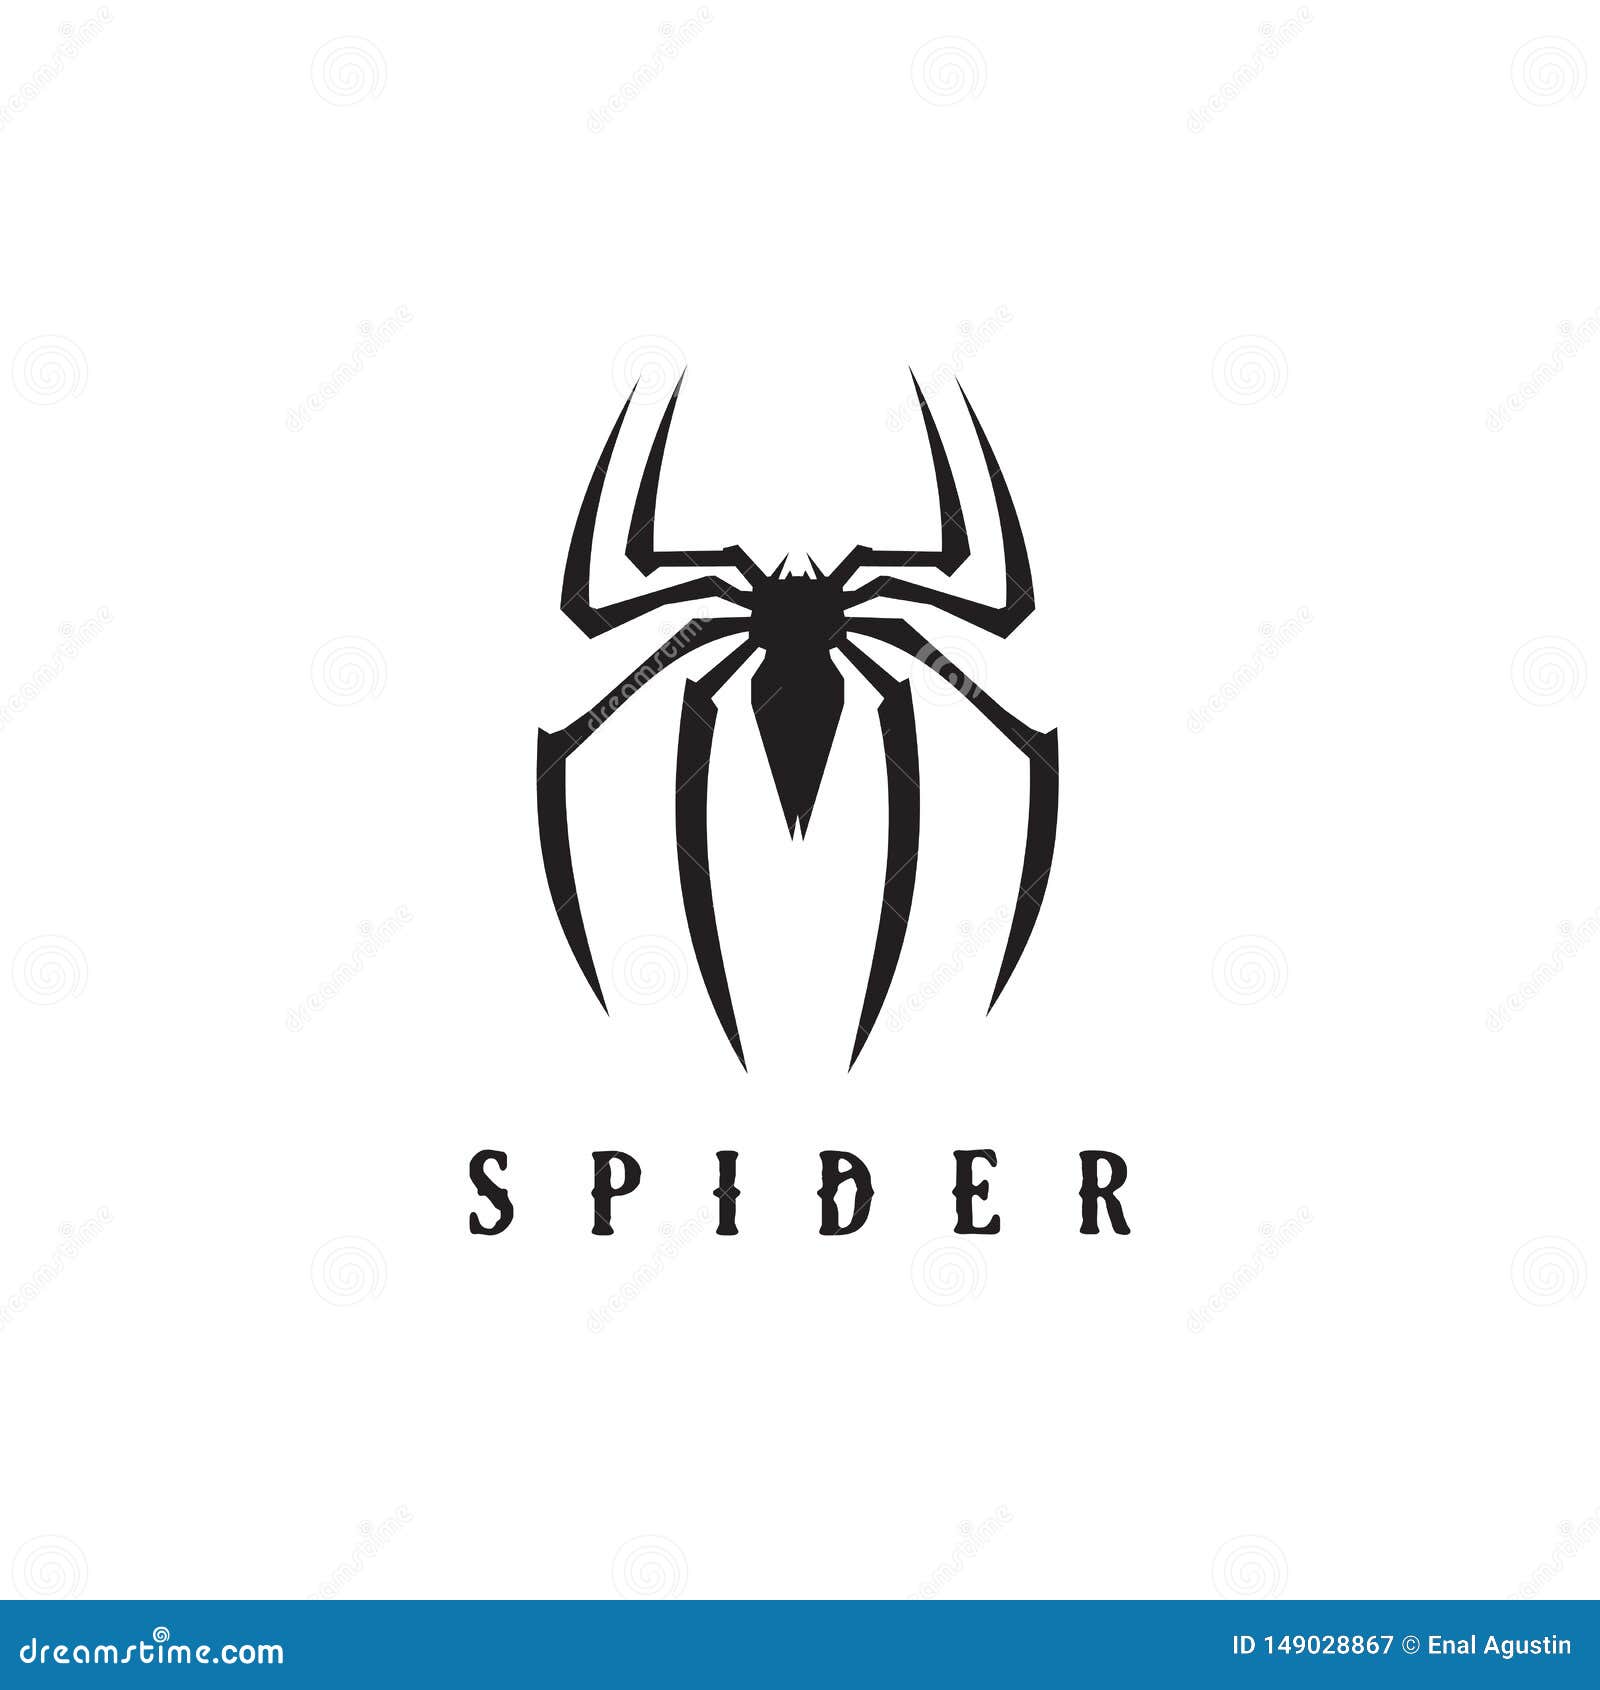 731 Spiderman Logo Images, Stock Photos & Vectors | Shutterstock